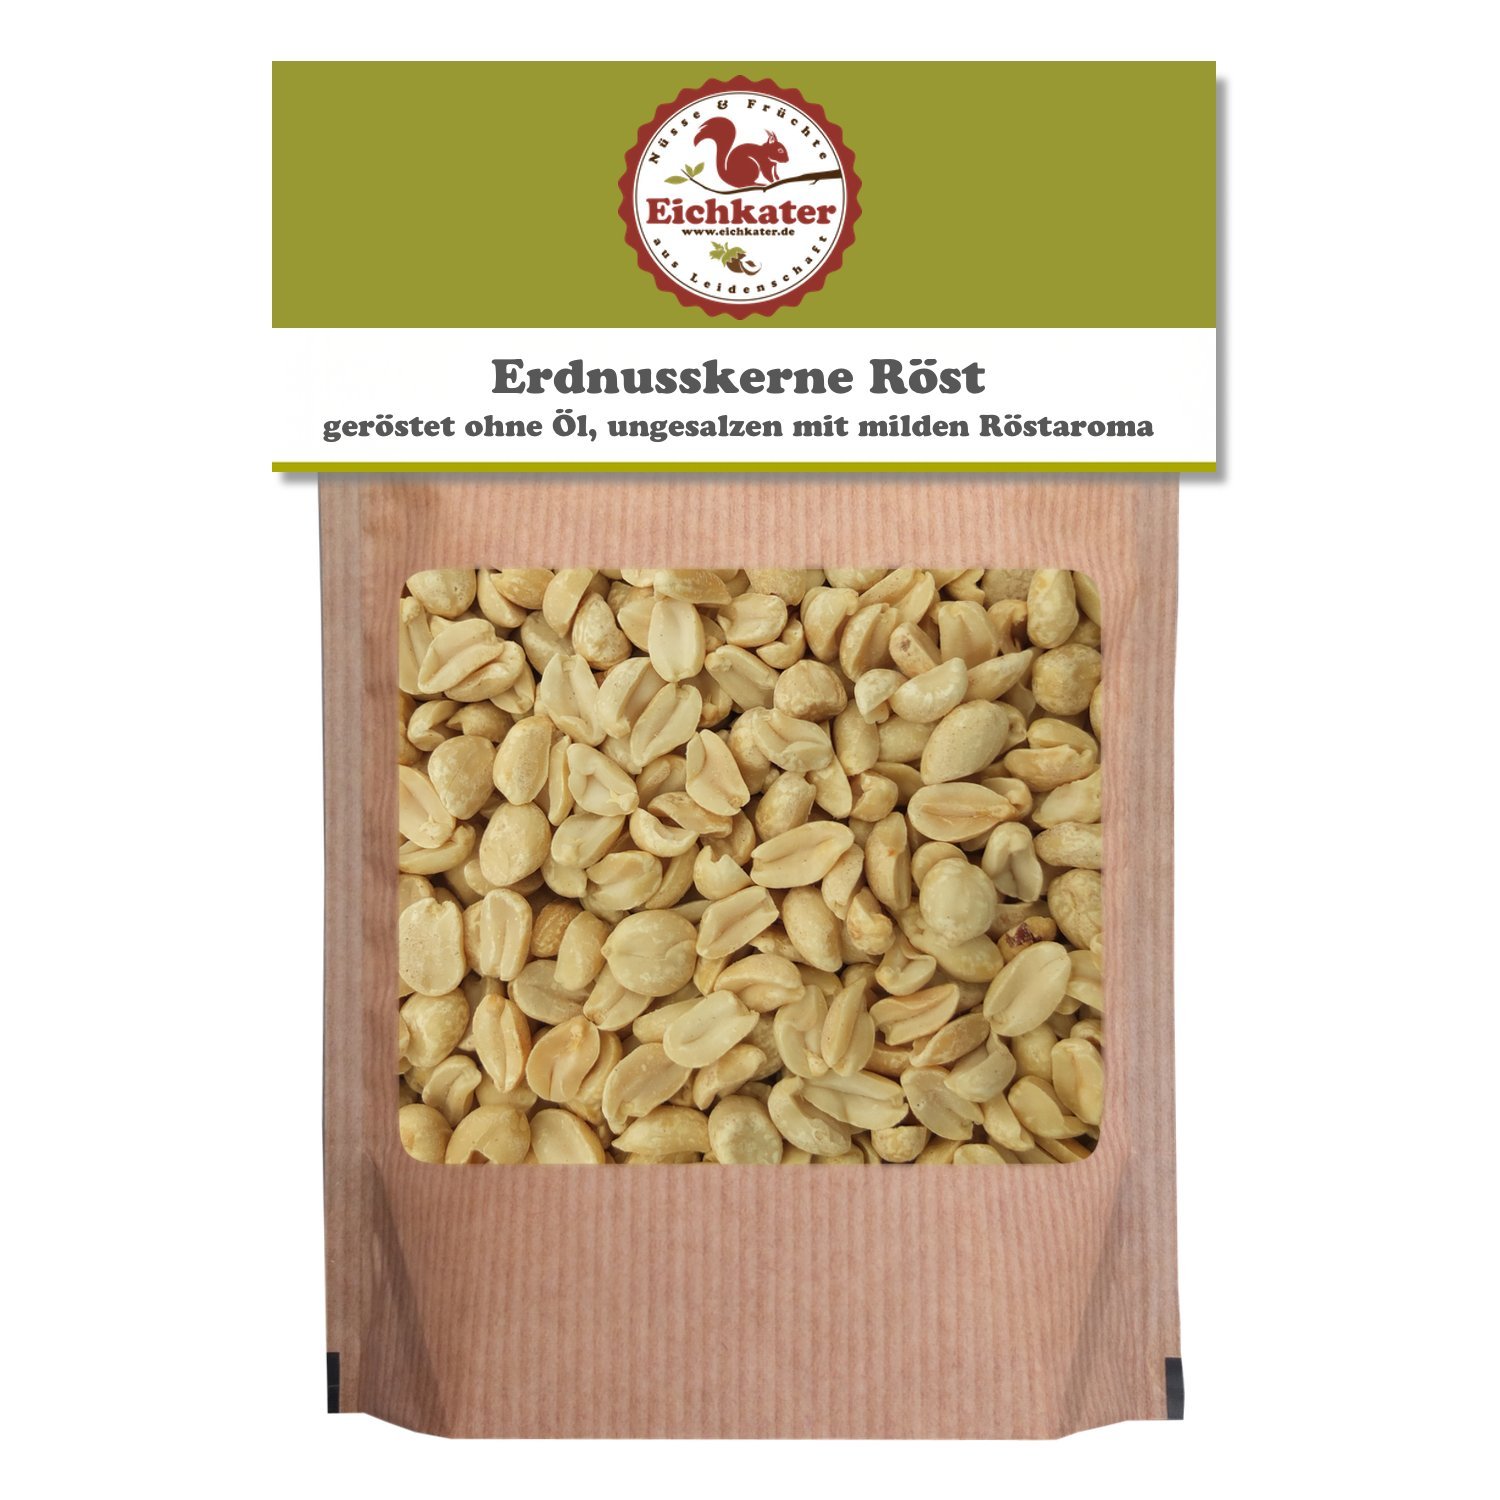 Eichkater Erdnusskerne Röst 4er-Pack (4x750 g)